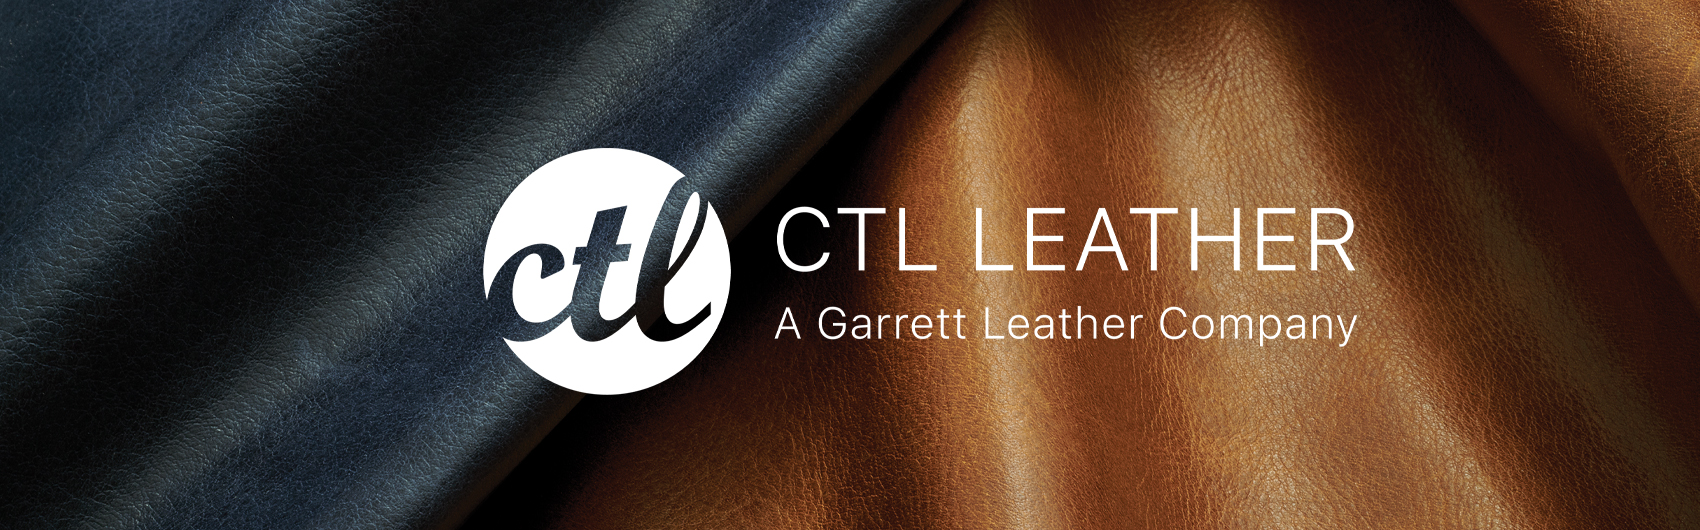 CTL Leather Logo image